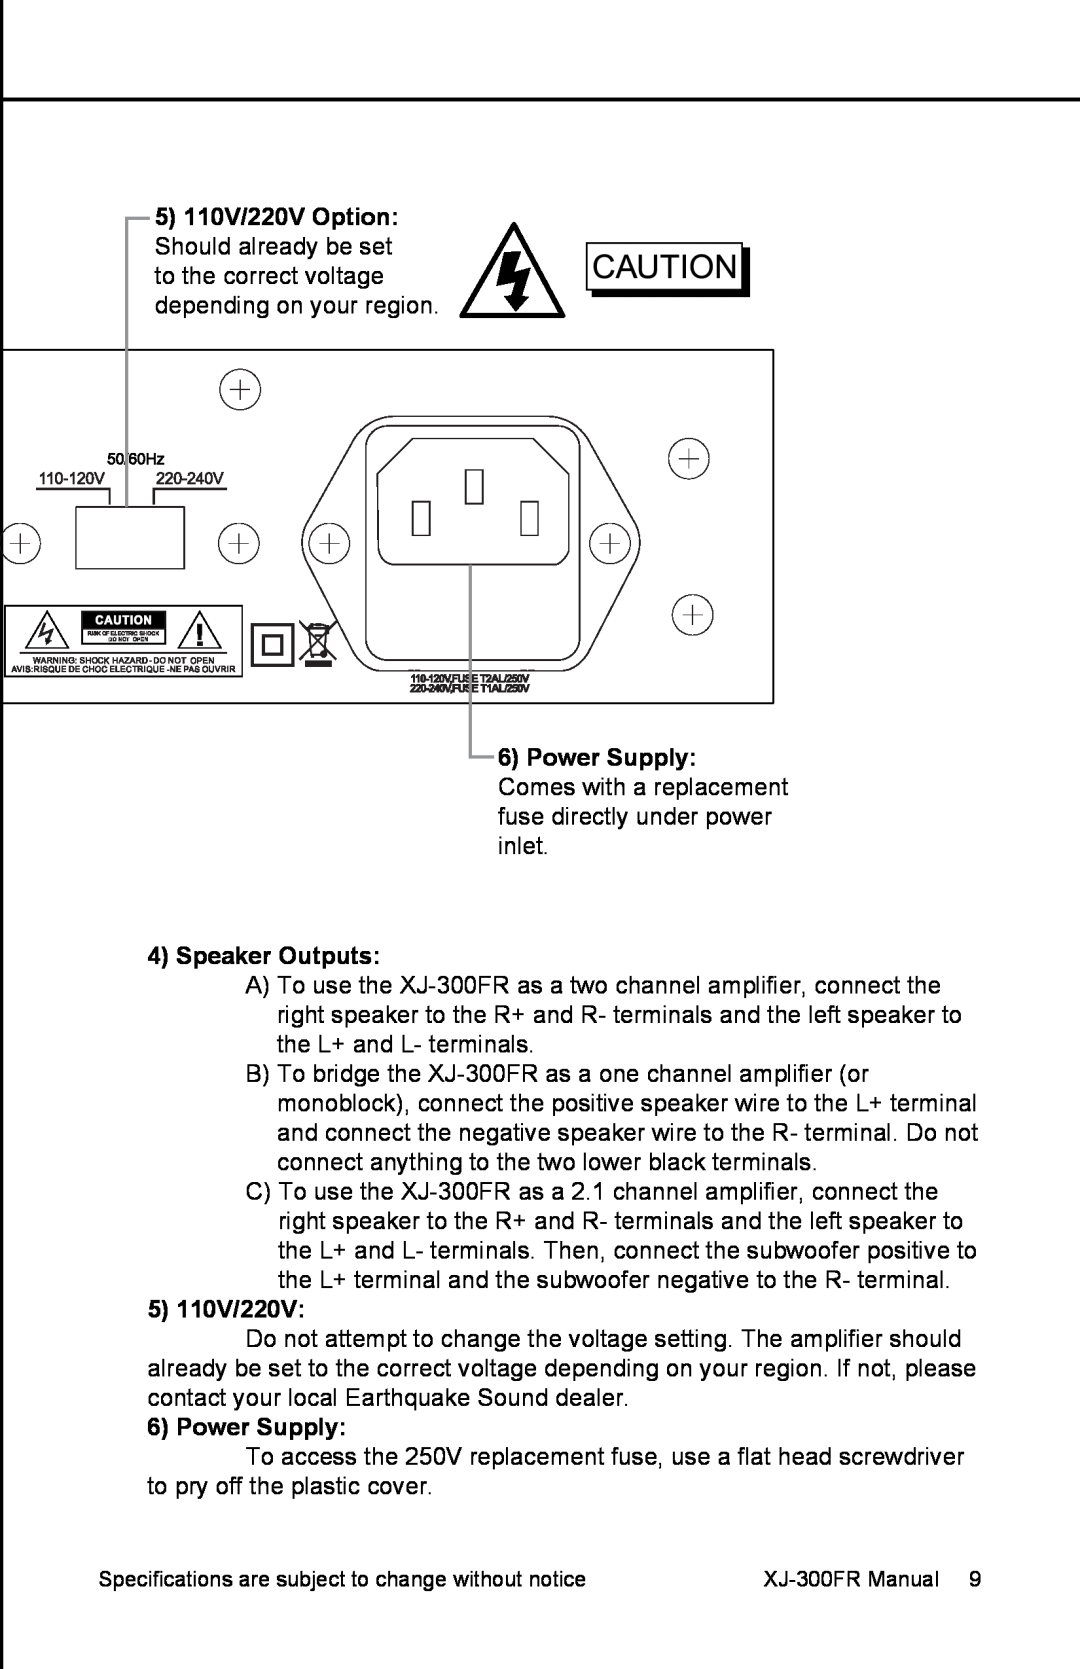 Earthquake Sound XJ-300 FR user manual 5110V/220V Option Should already be set, 4Speaker Outputs, Power Supply 